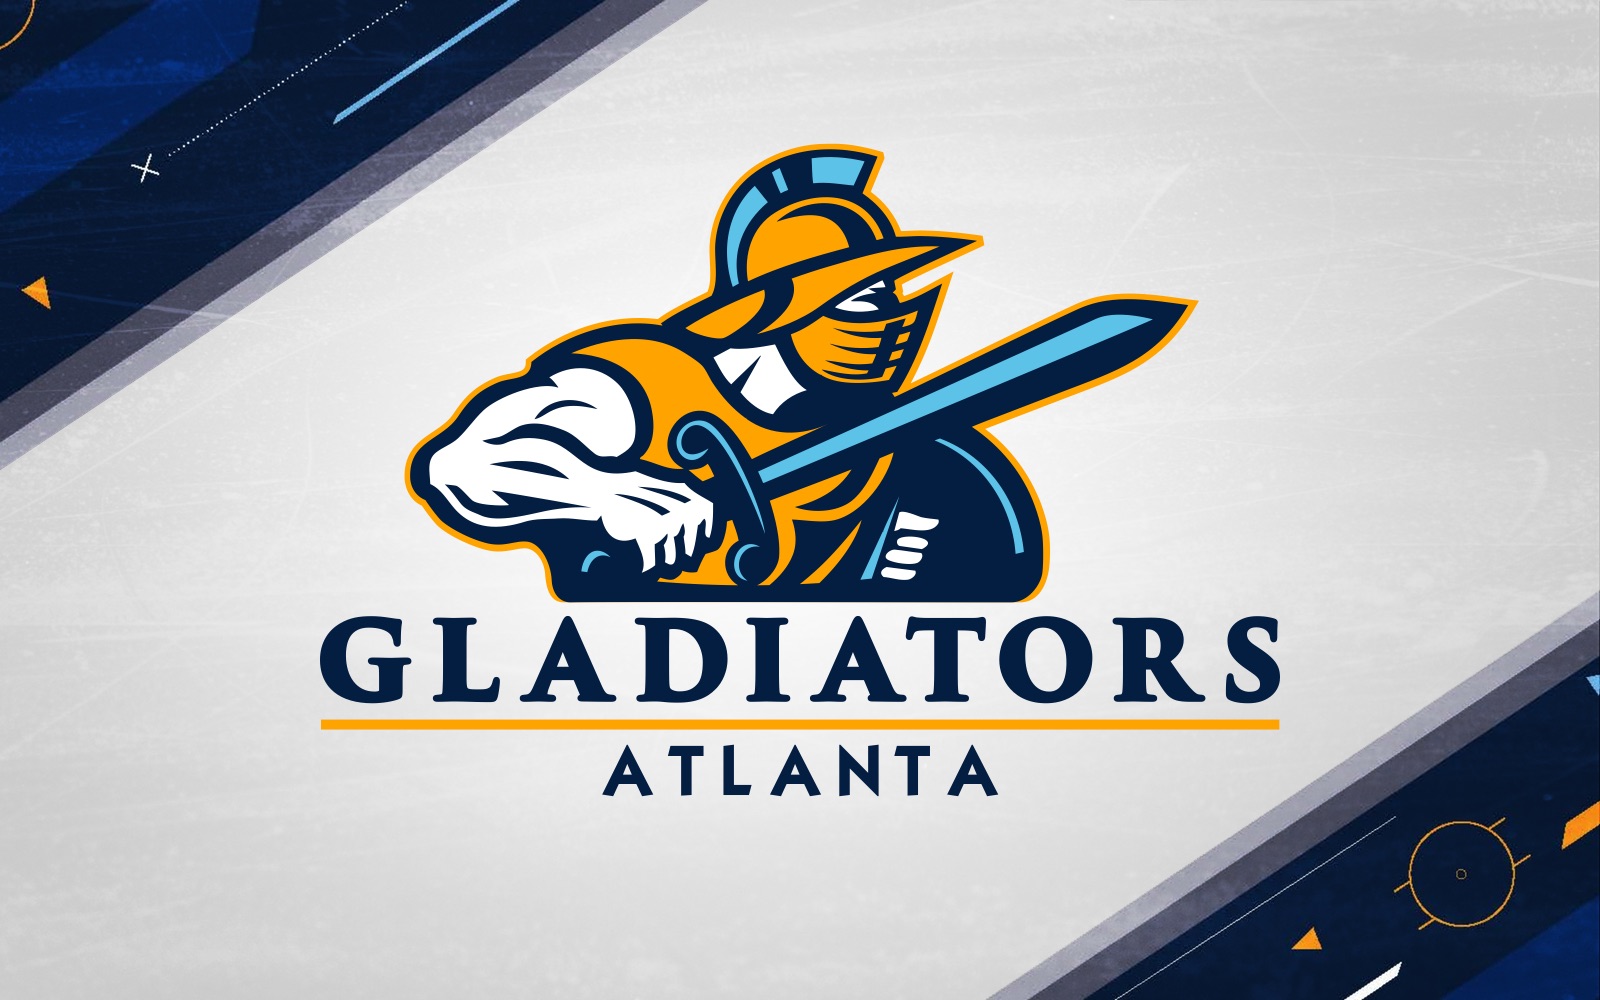 Gladiators Atlanta logo and illustration